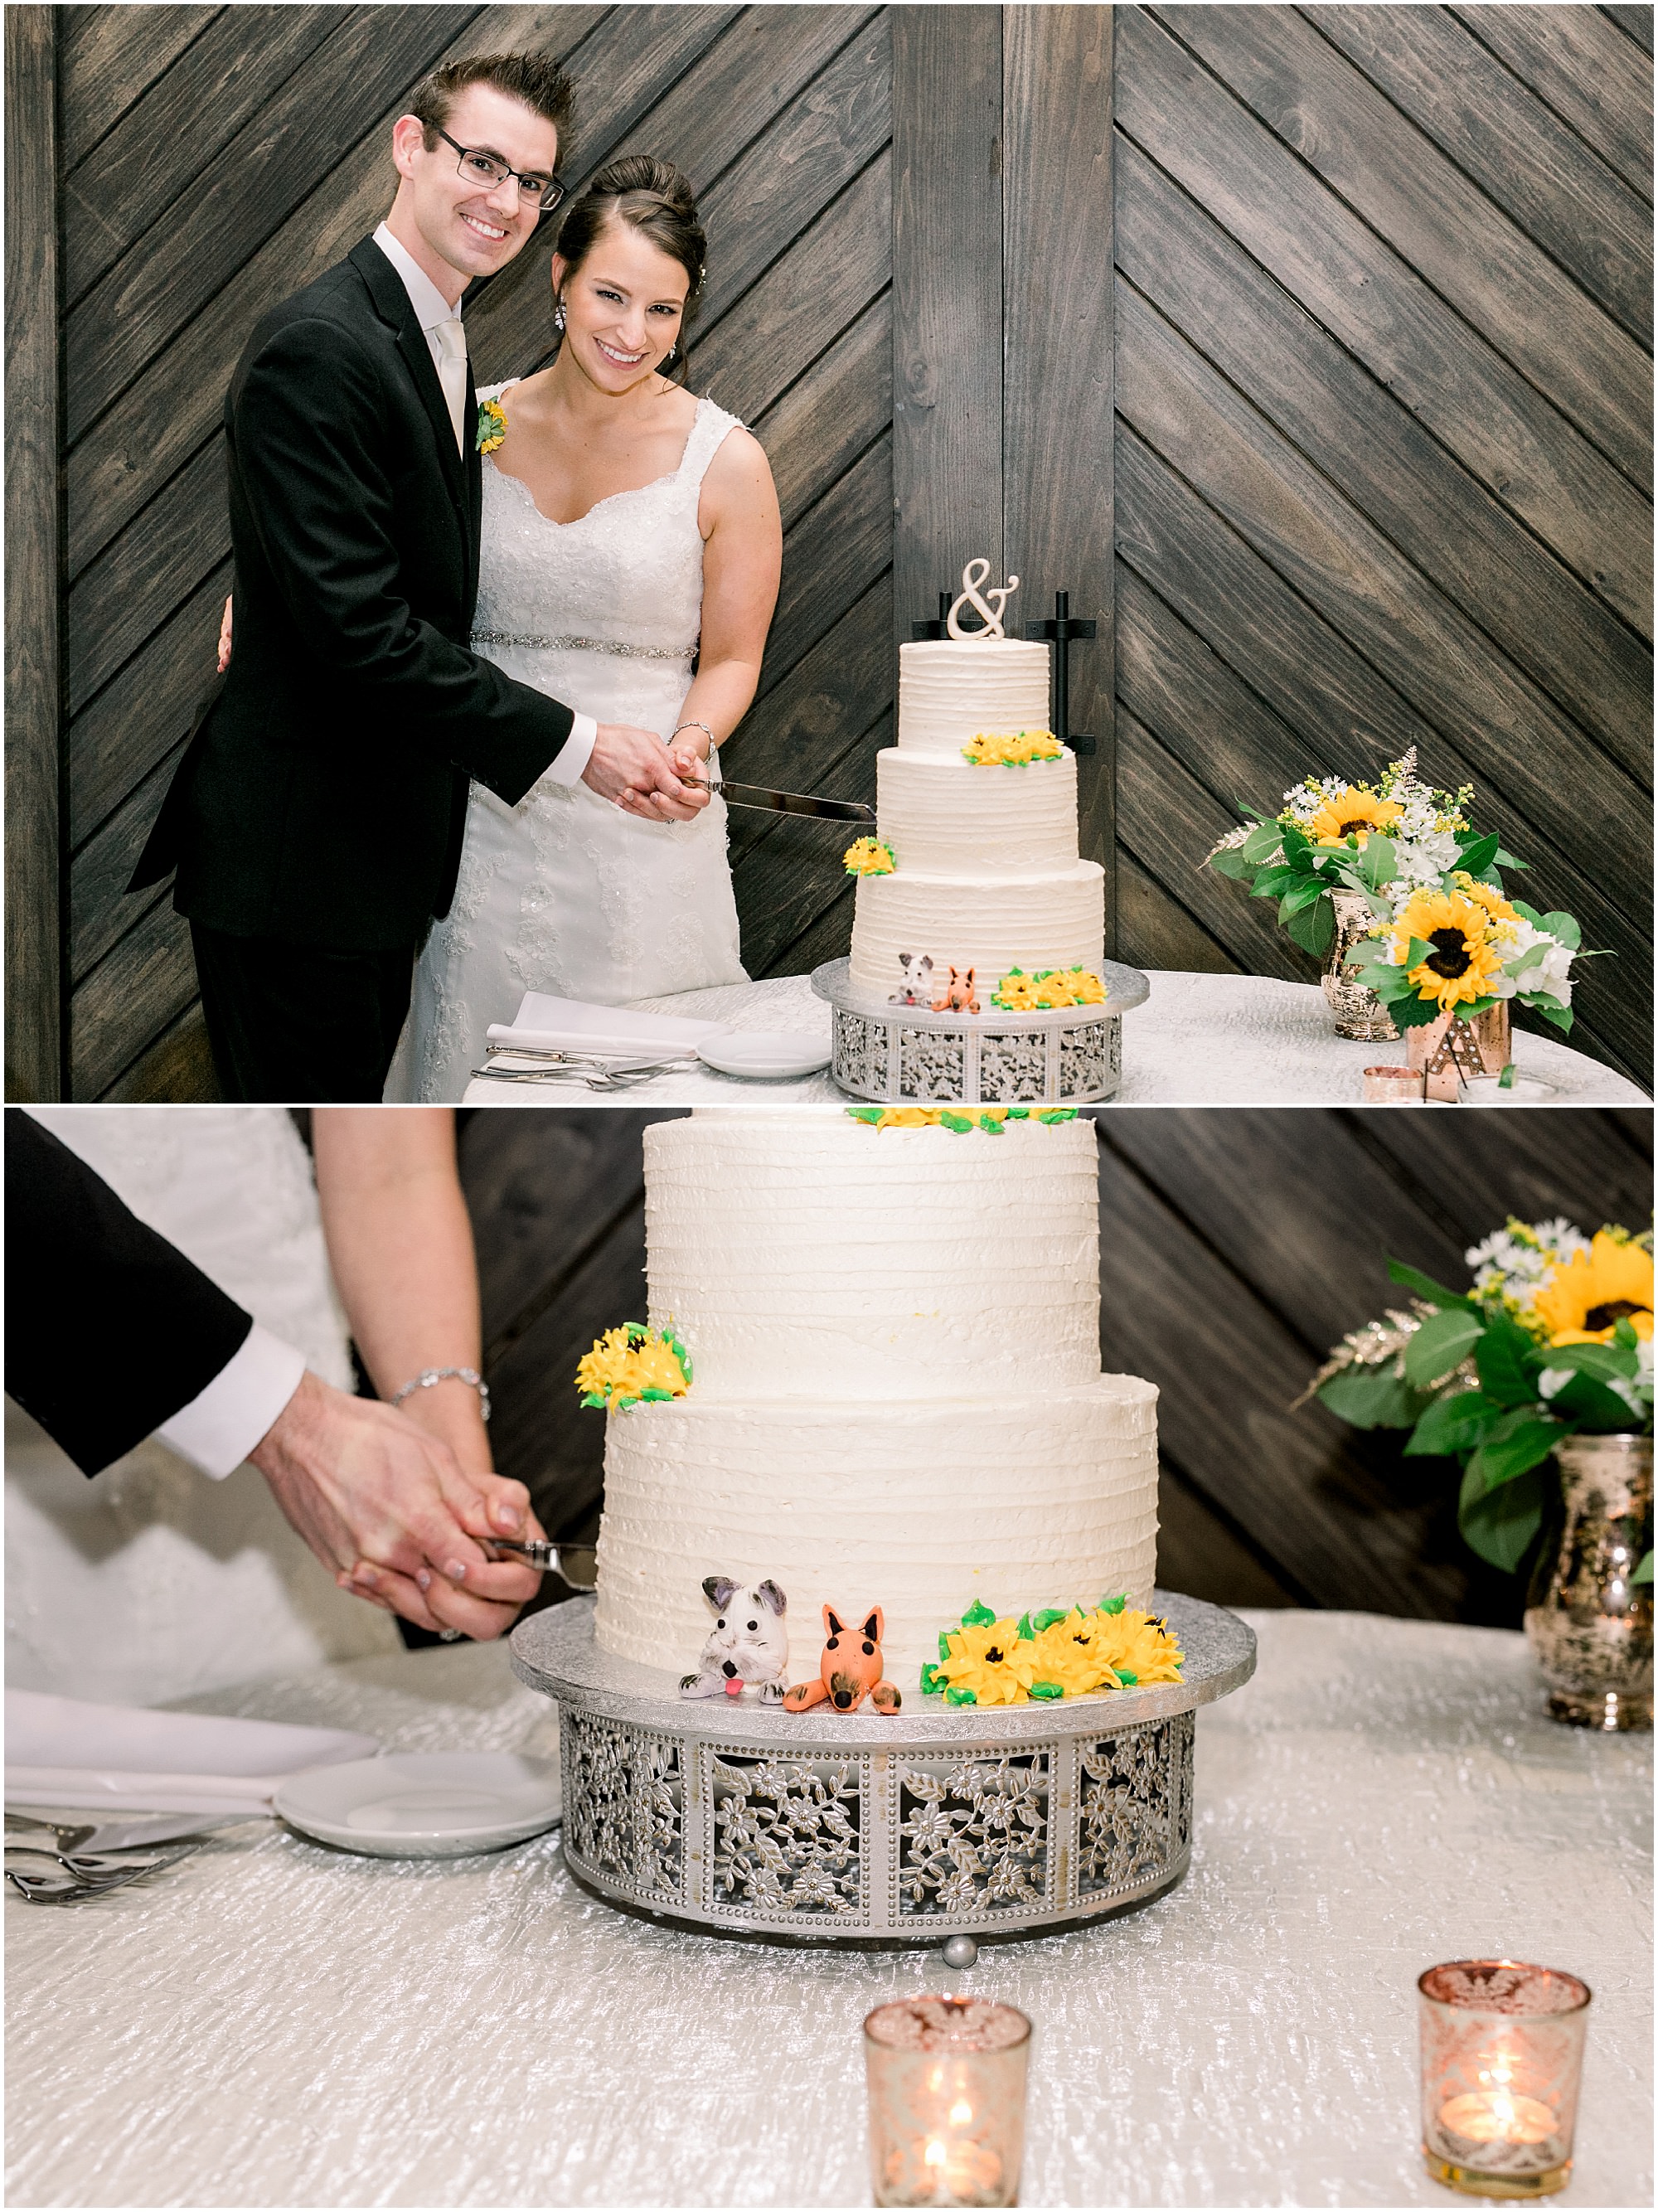 Couple cut their wedding cake.